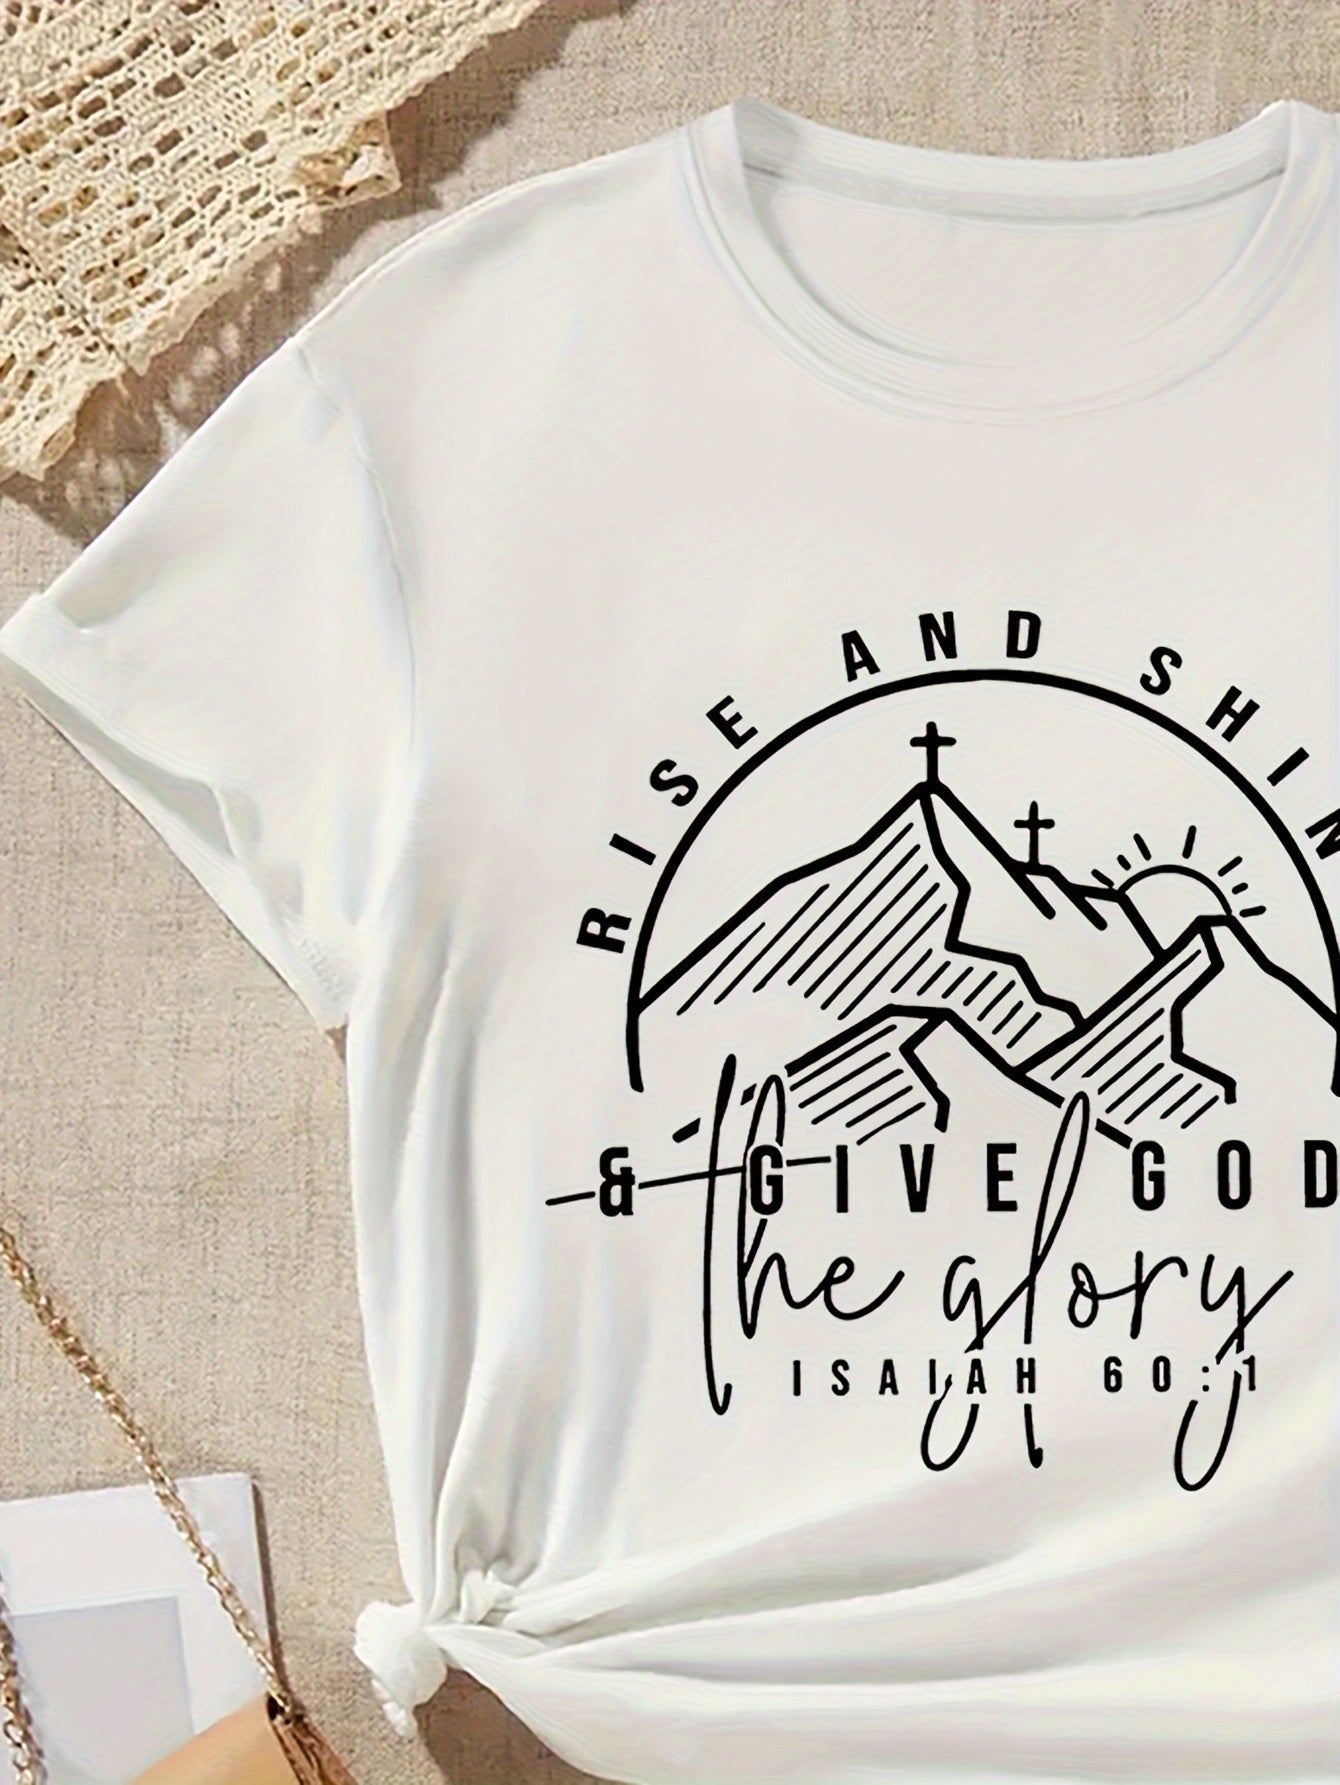 RISE AND SHINE Youth Christian T-shirt claimedbygoddesigns